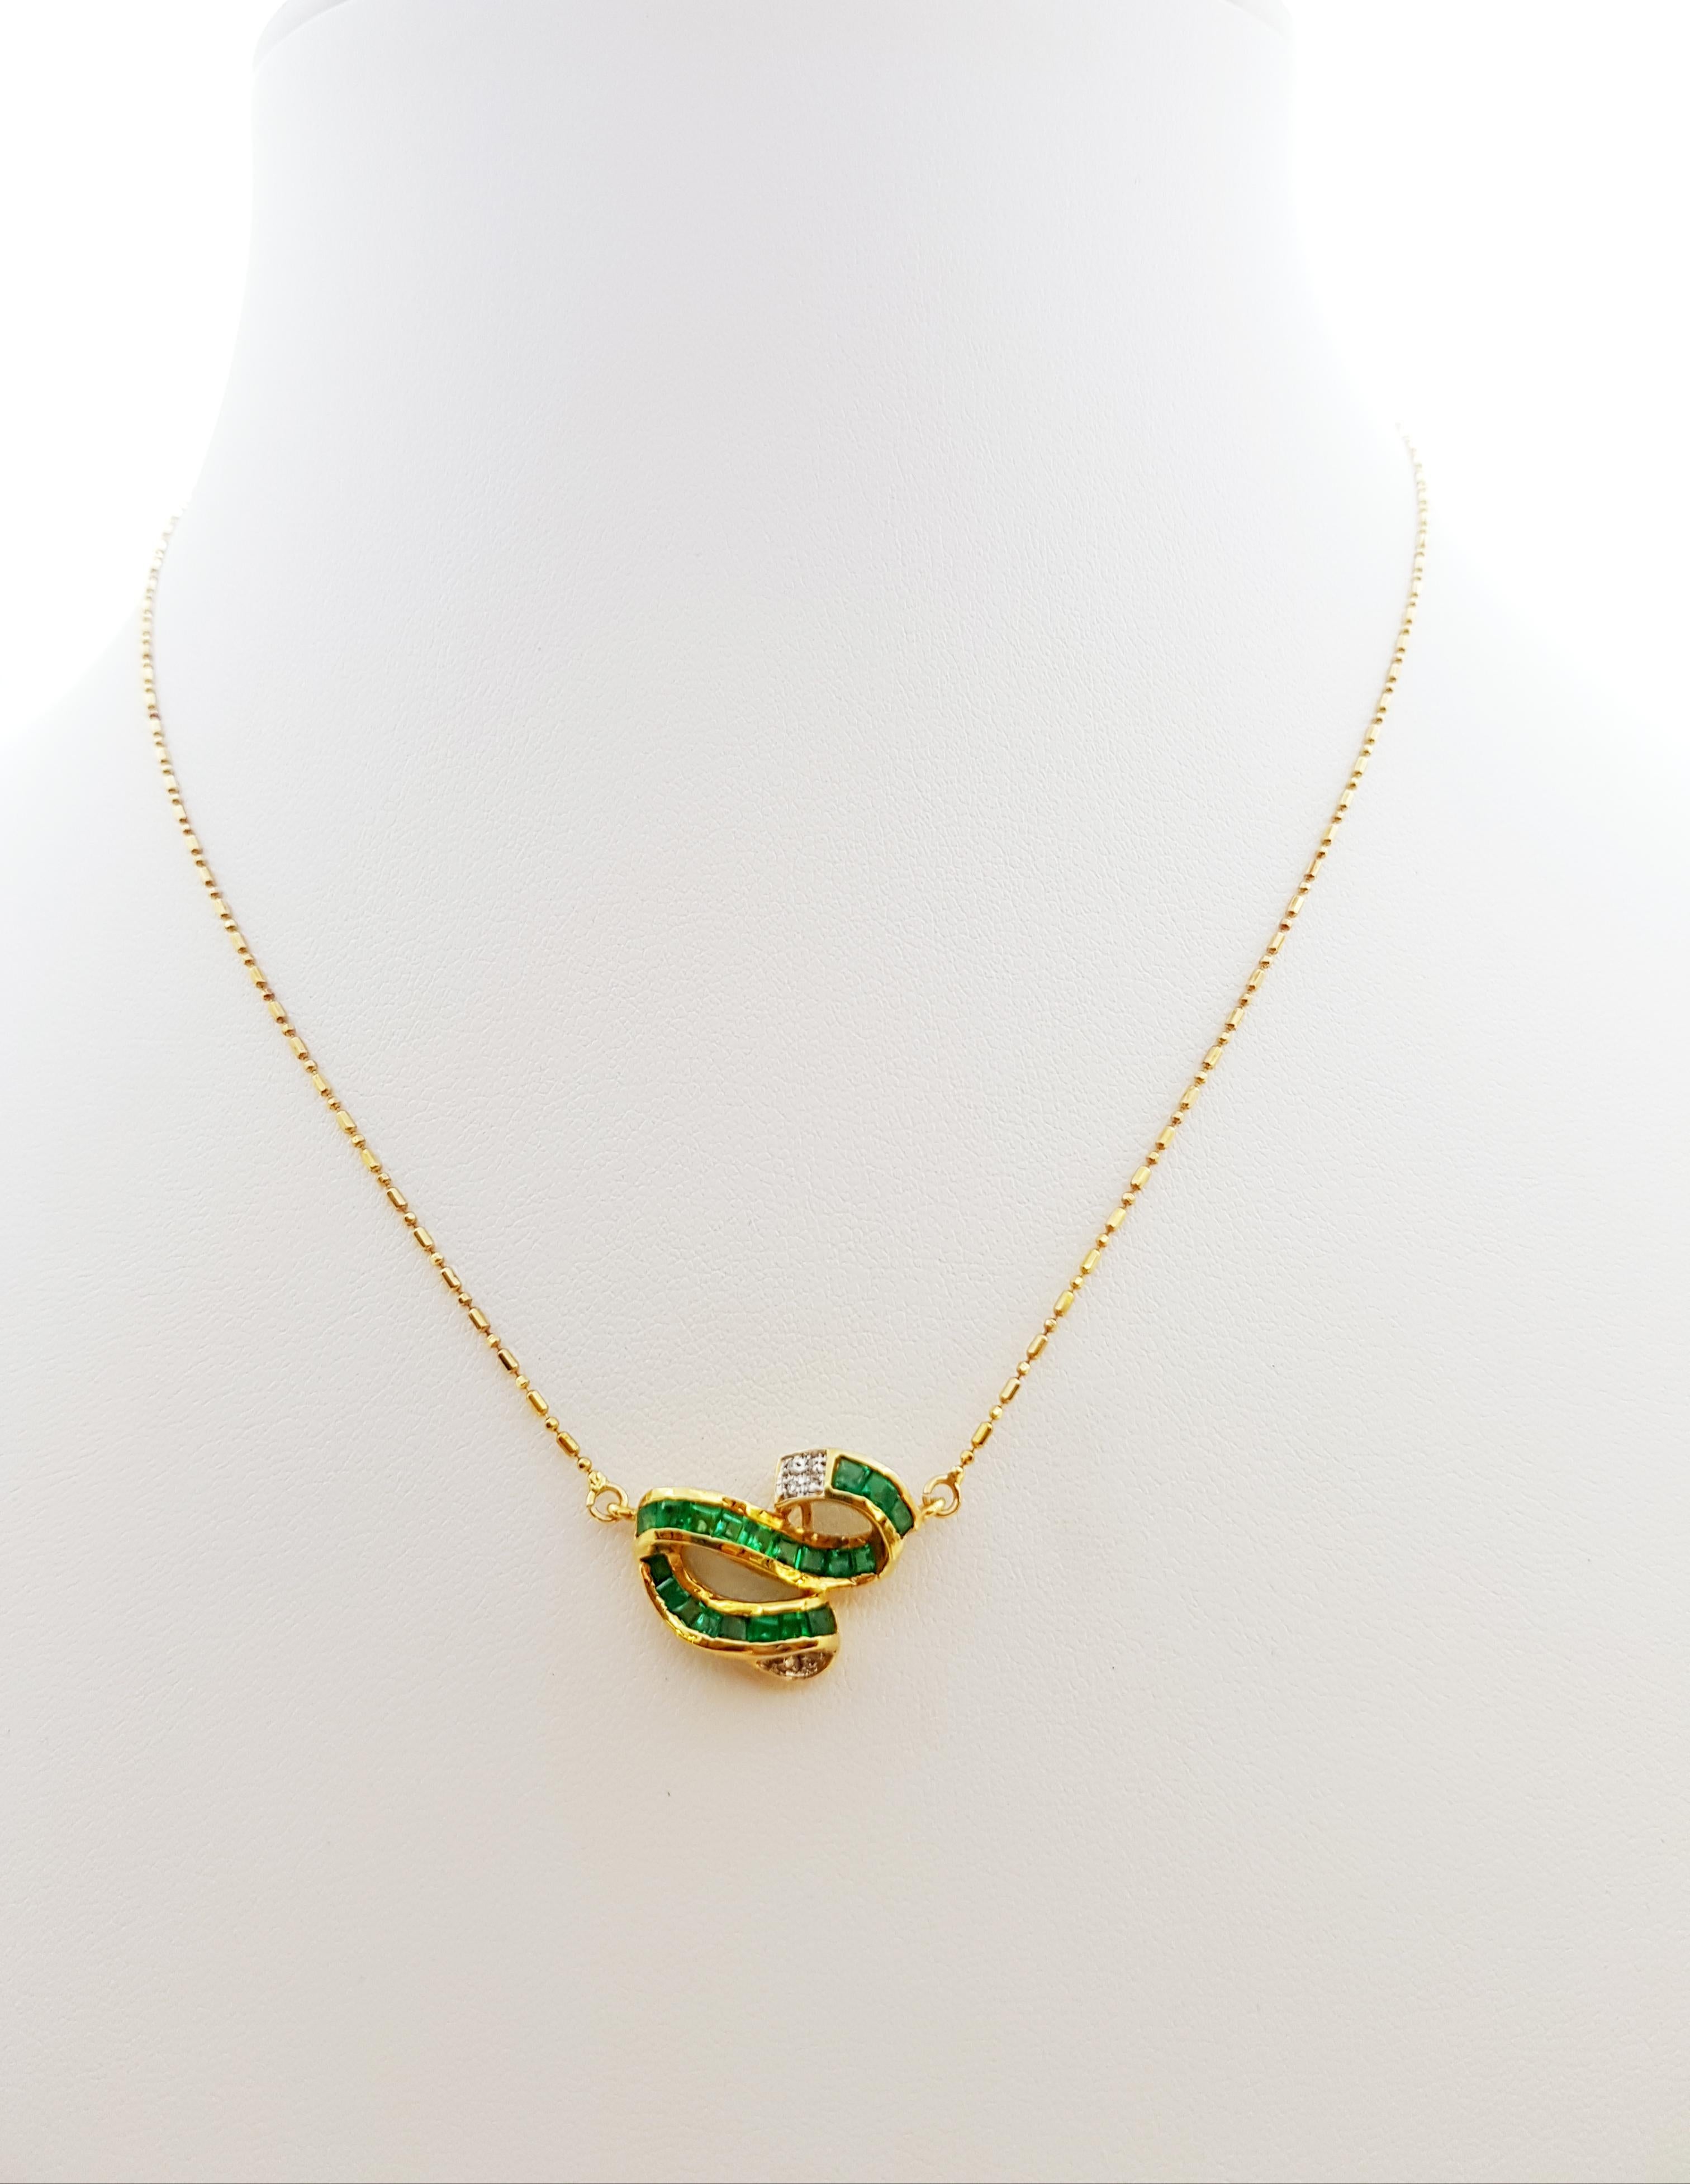 Emerald 1.10 carats with Diamond 0.03 carat Necklace set in 18 Karat Gold Settings

Width: 1.5 cm 
Length: 43.5 cm
Total Weight: 5.09 grams

